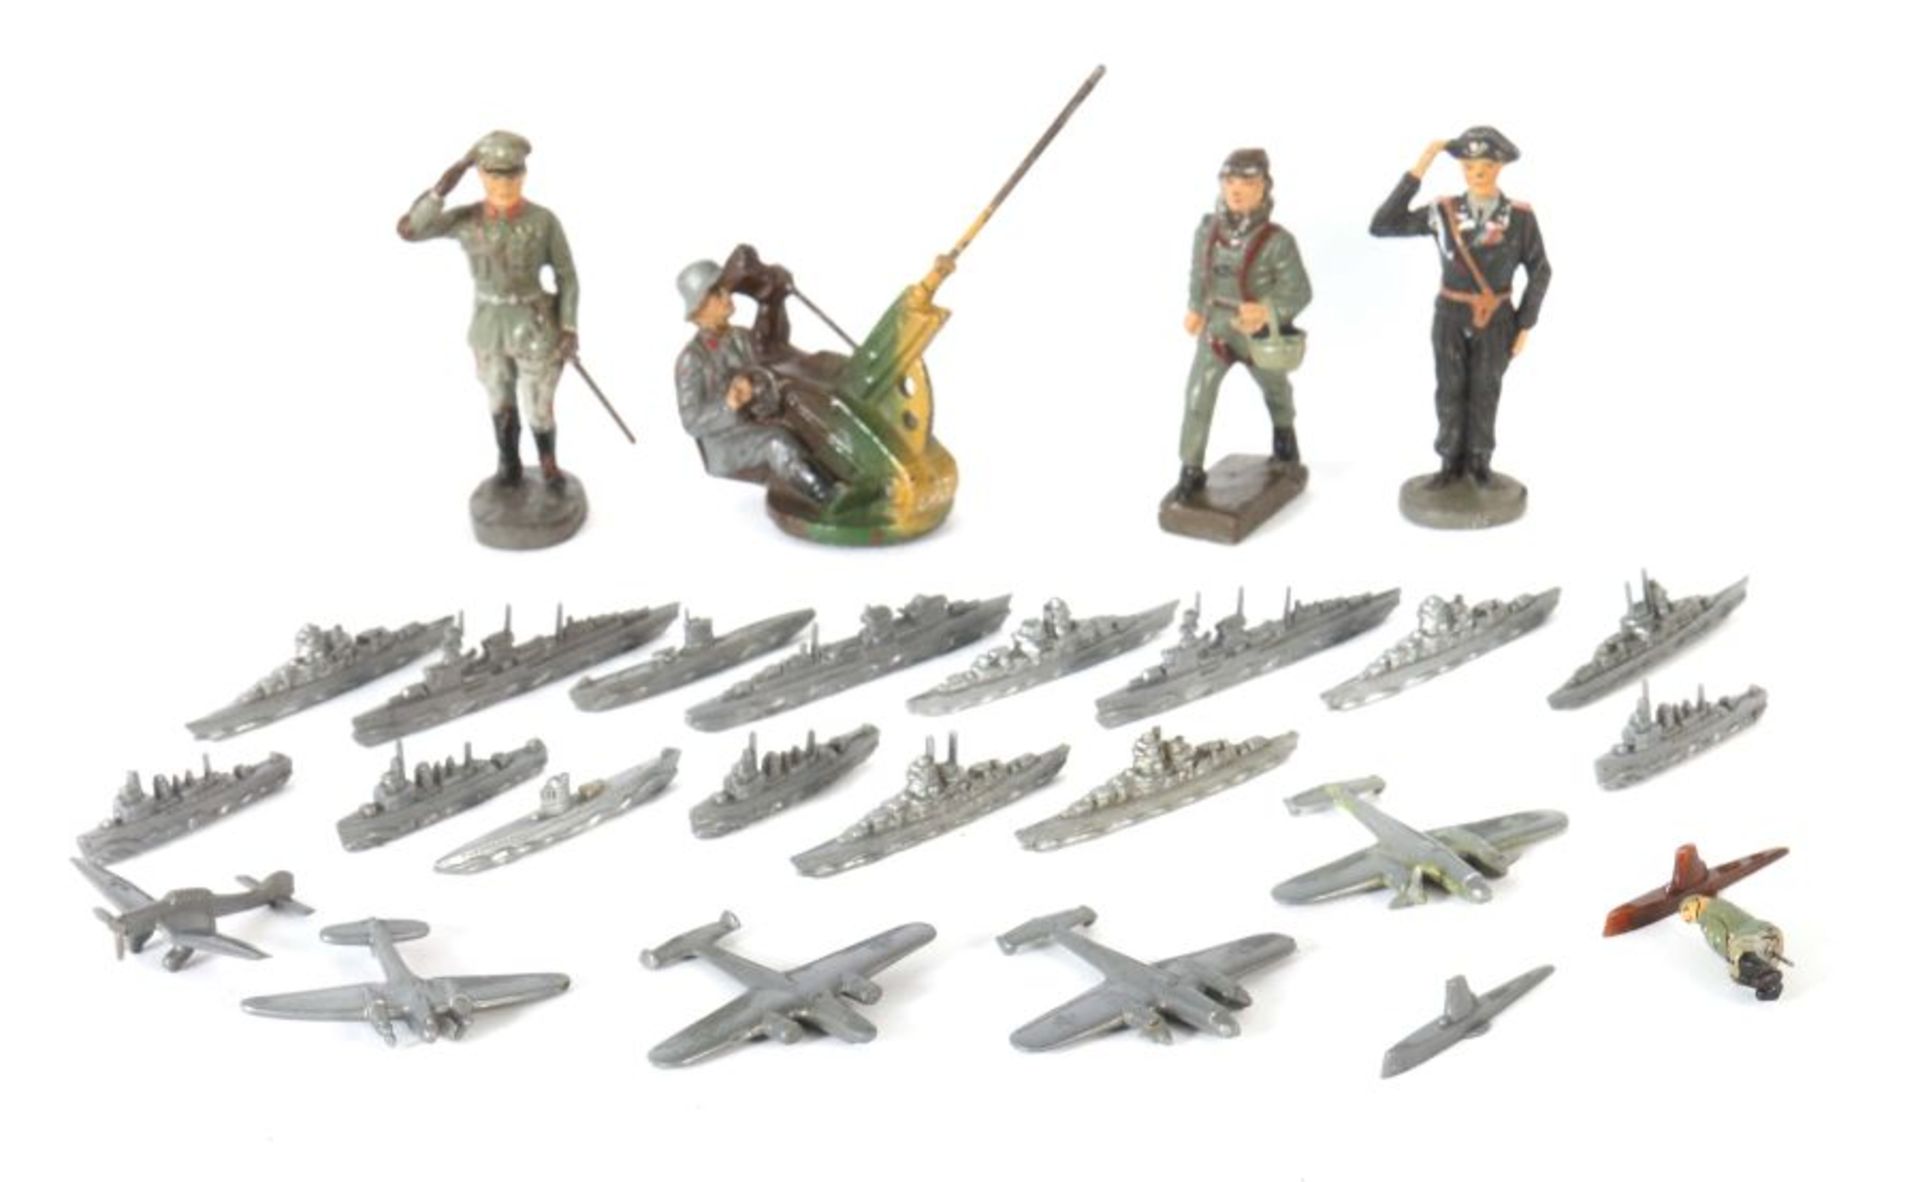 17 Militärschiffe, 5 Bomber & 5 Massefiguren wohl Magarine-Figuren, ca. 1970er, Jahre, Kunststoff,